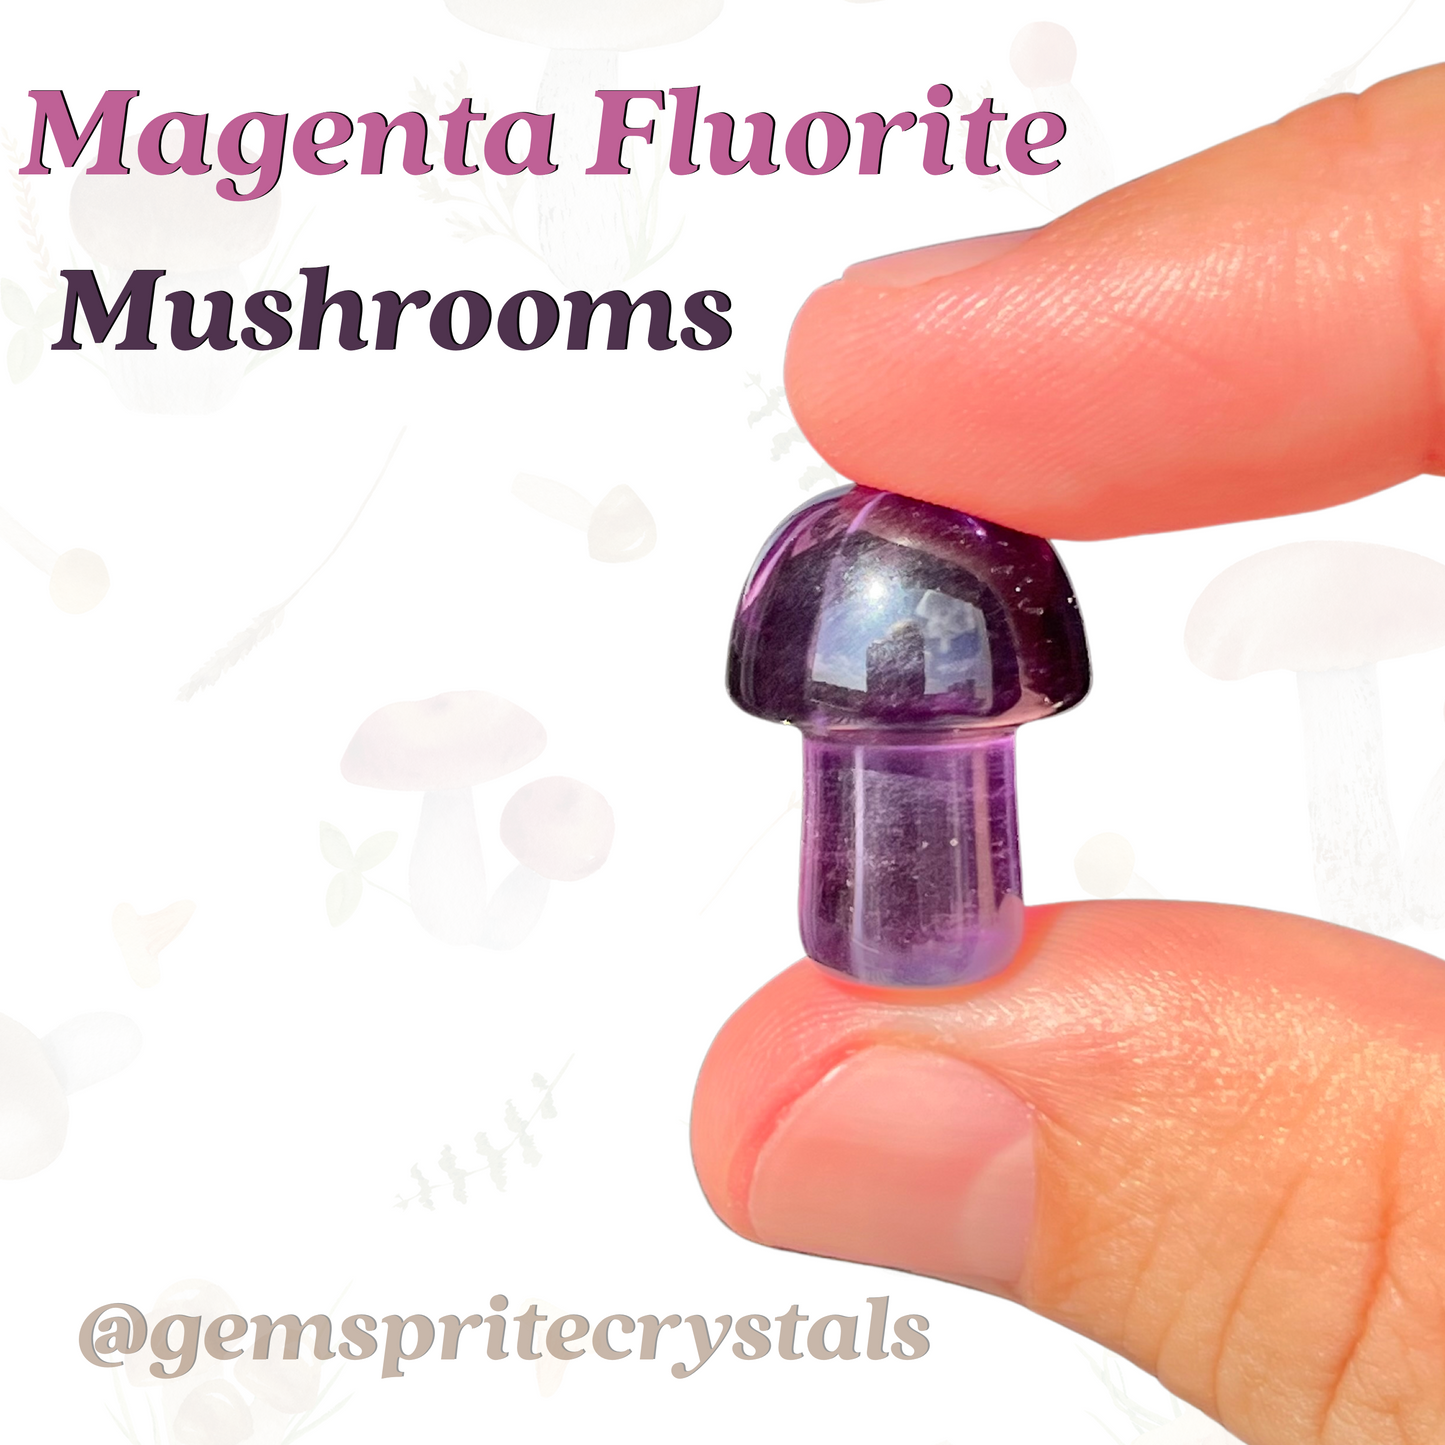 Magenta Fluorite Mushrooms